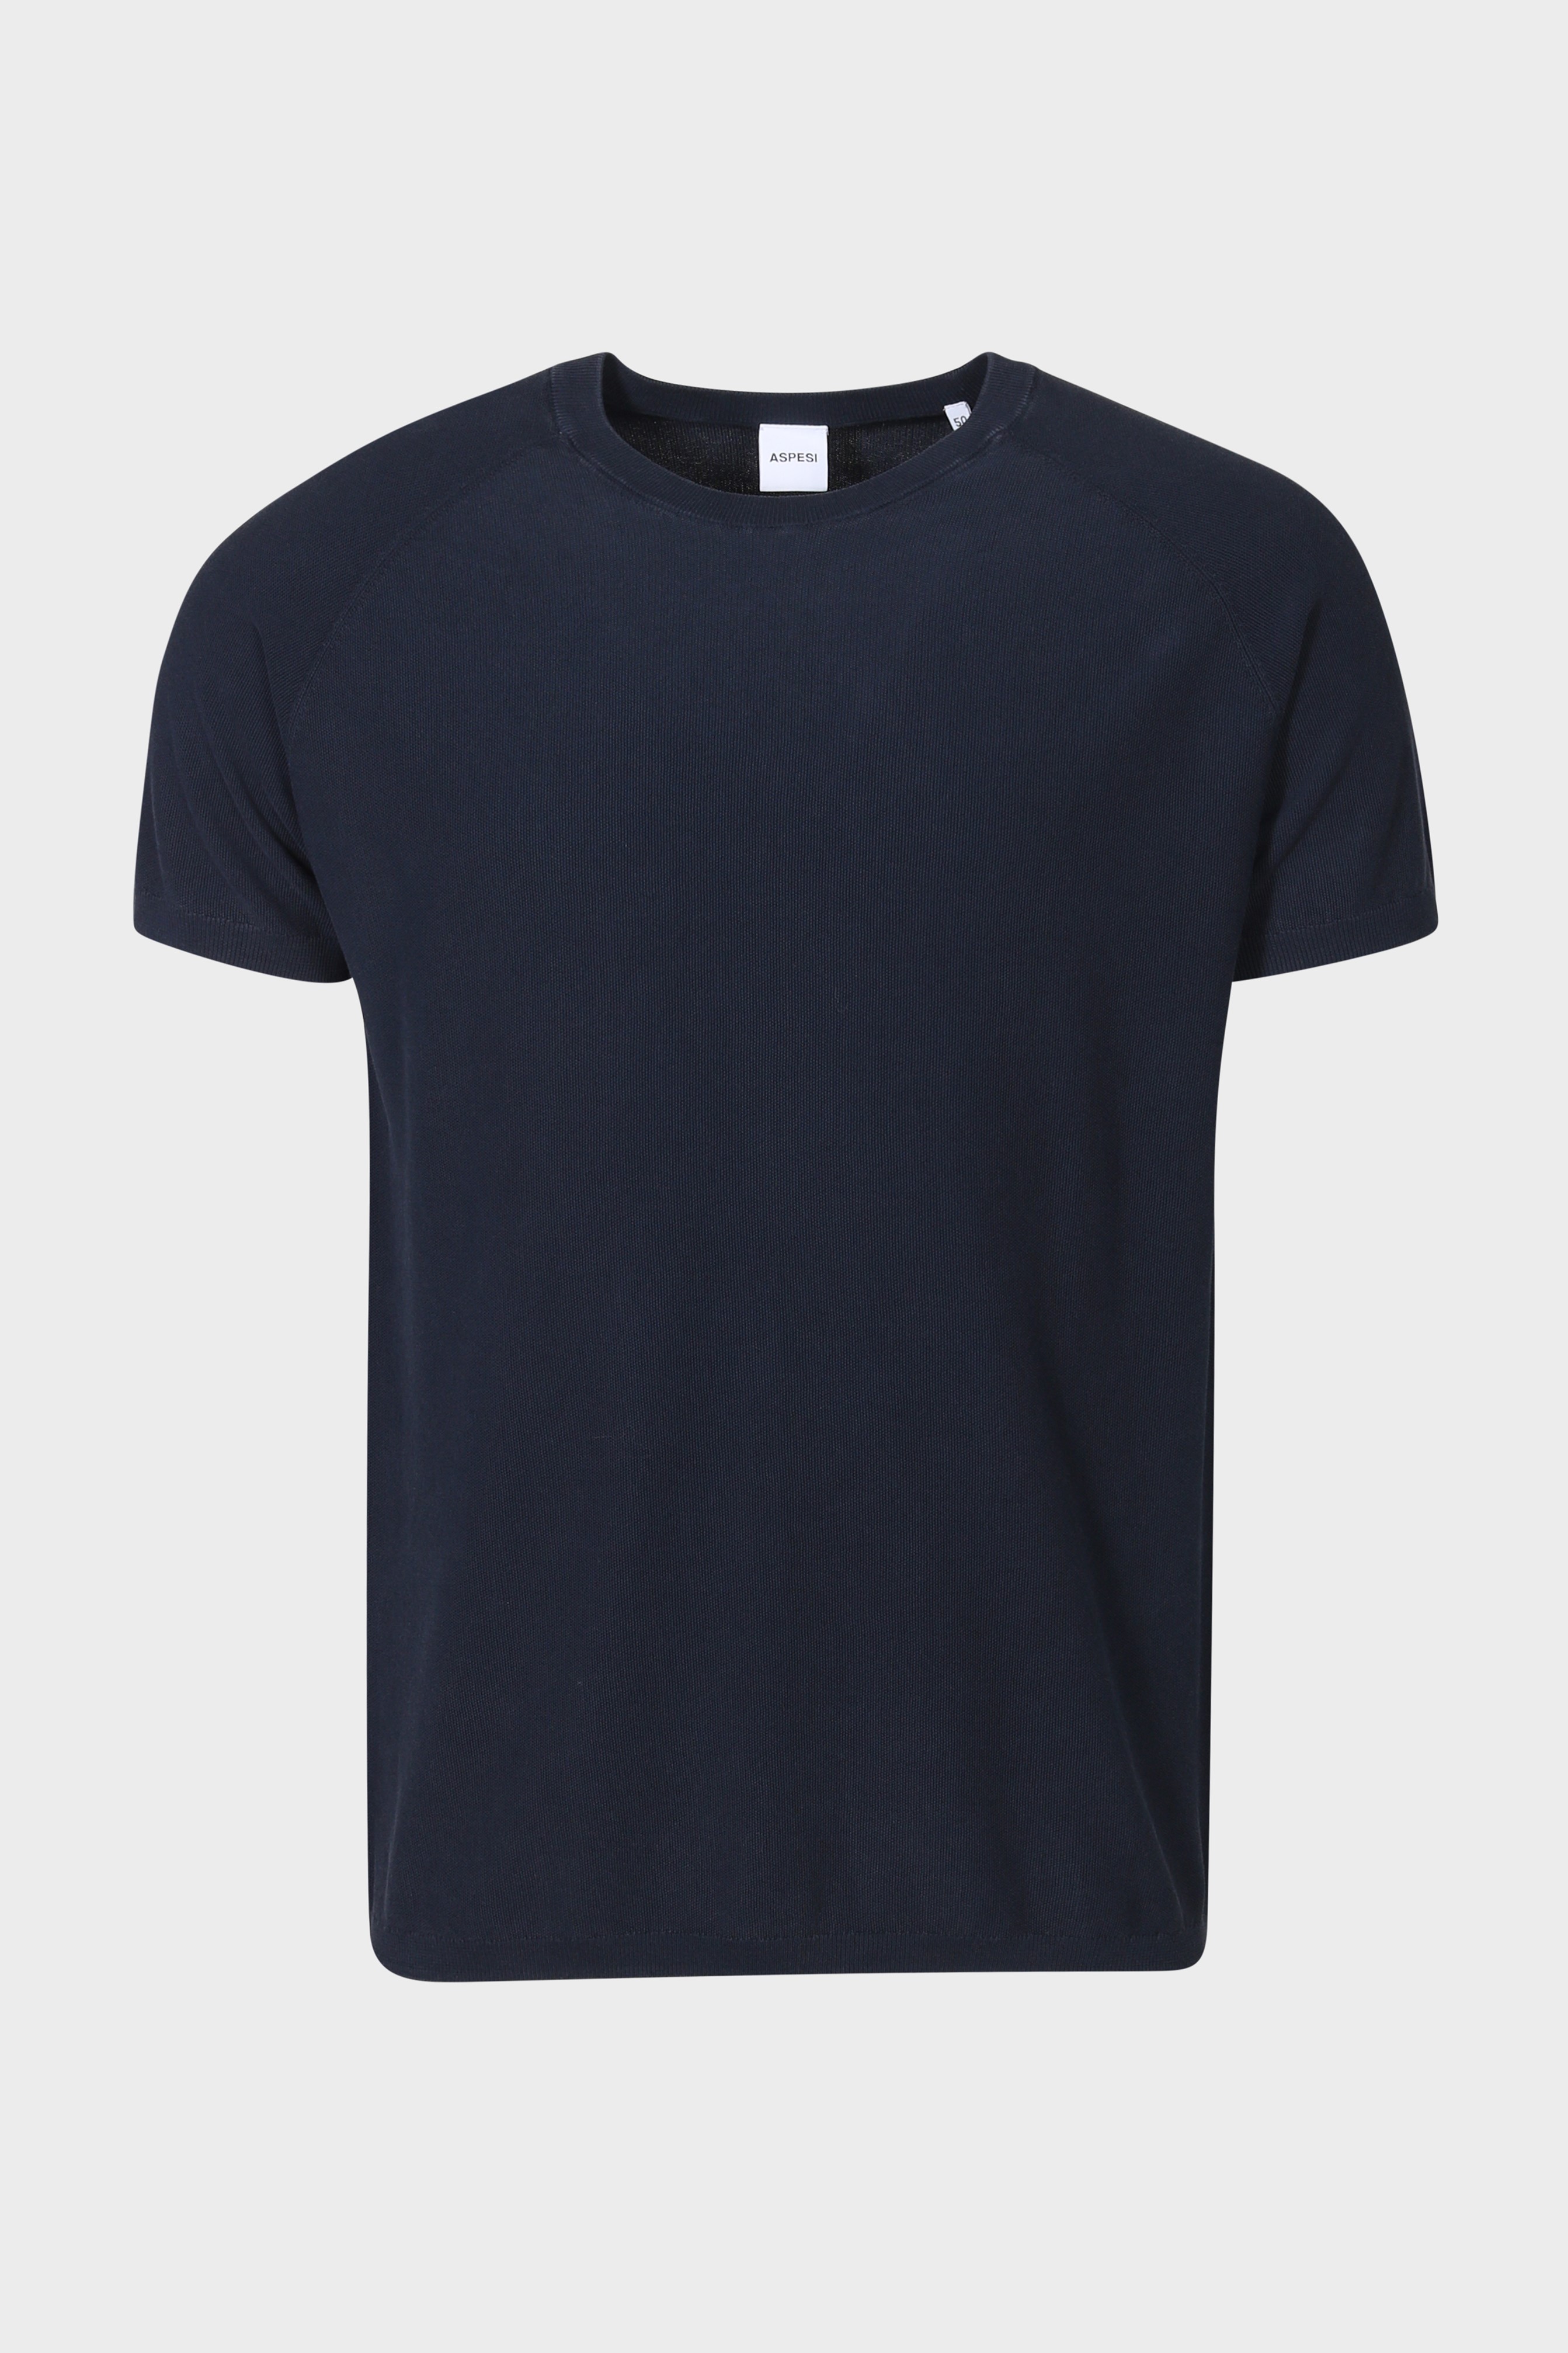 ASPESI Knit T-Shirt in Navy